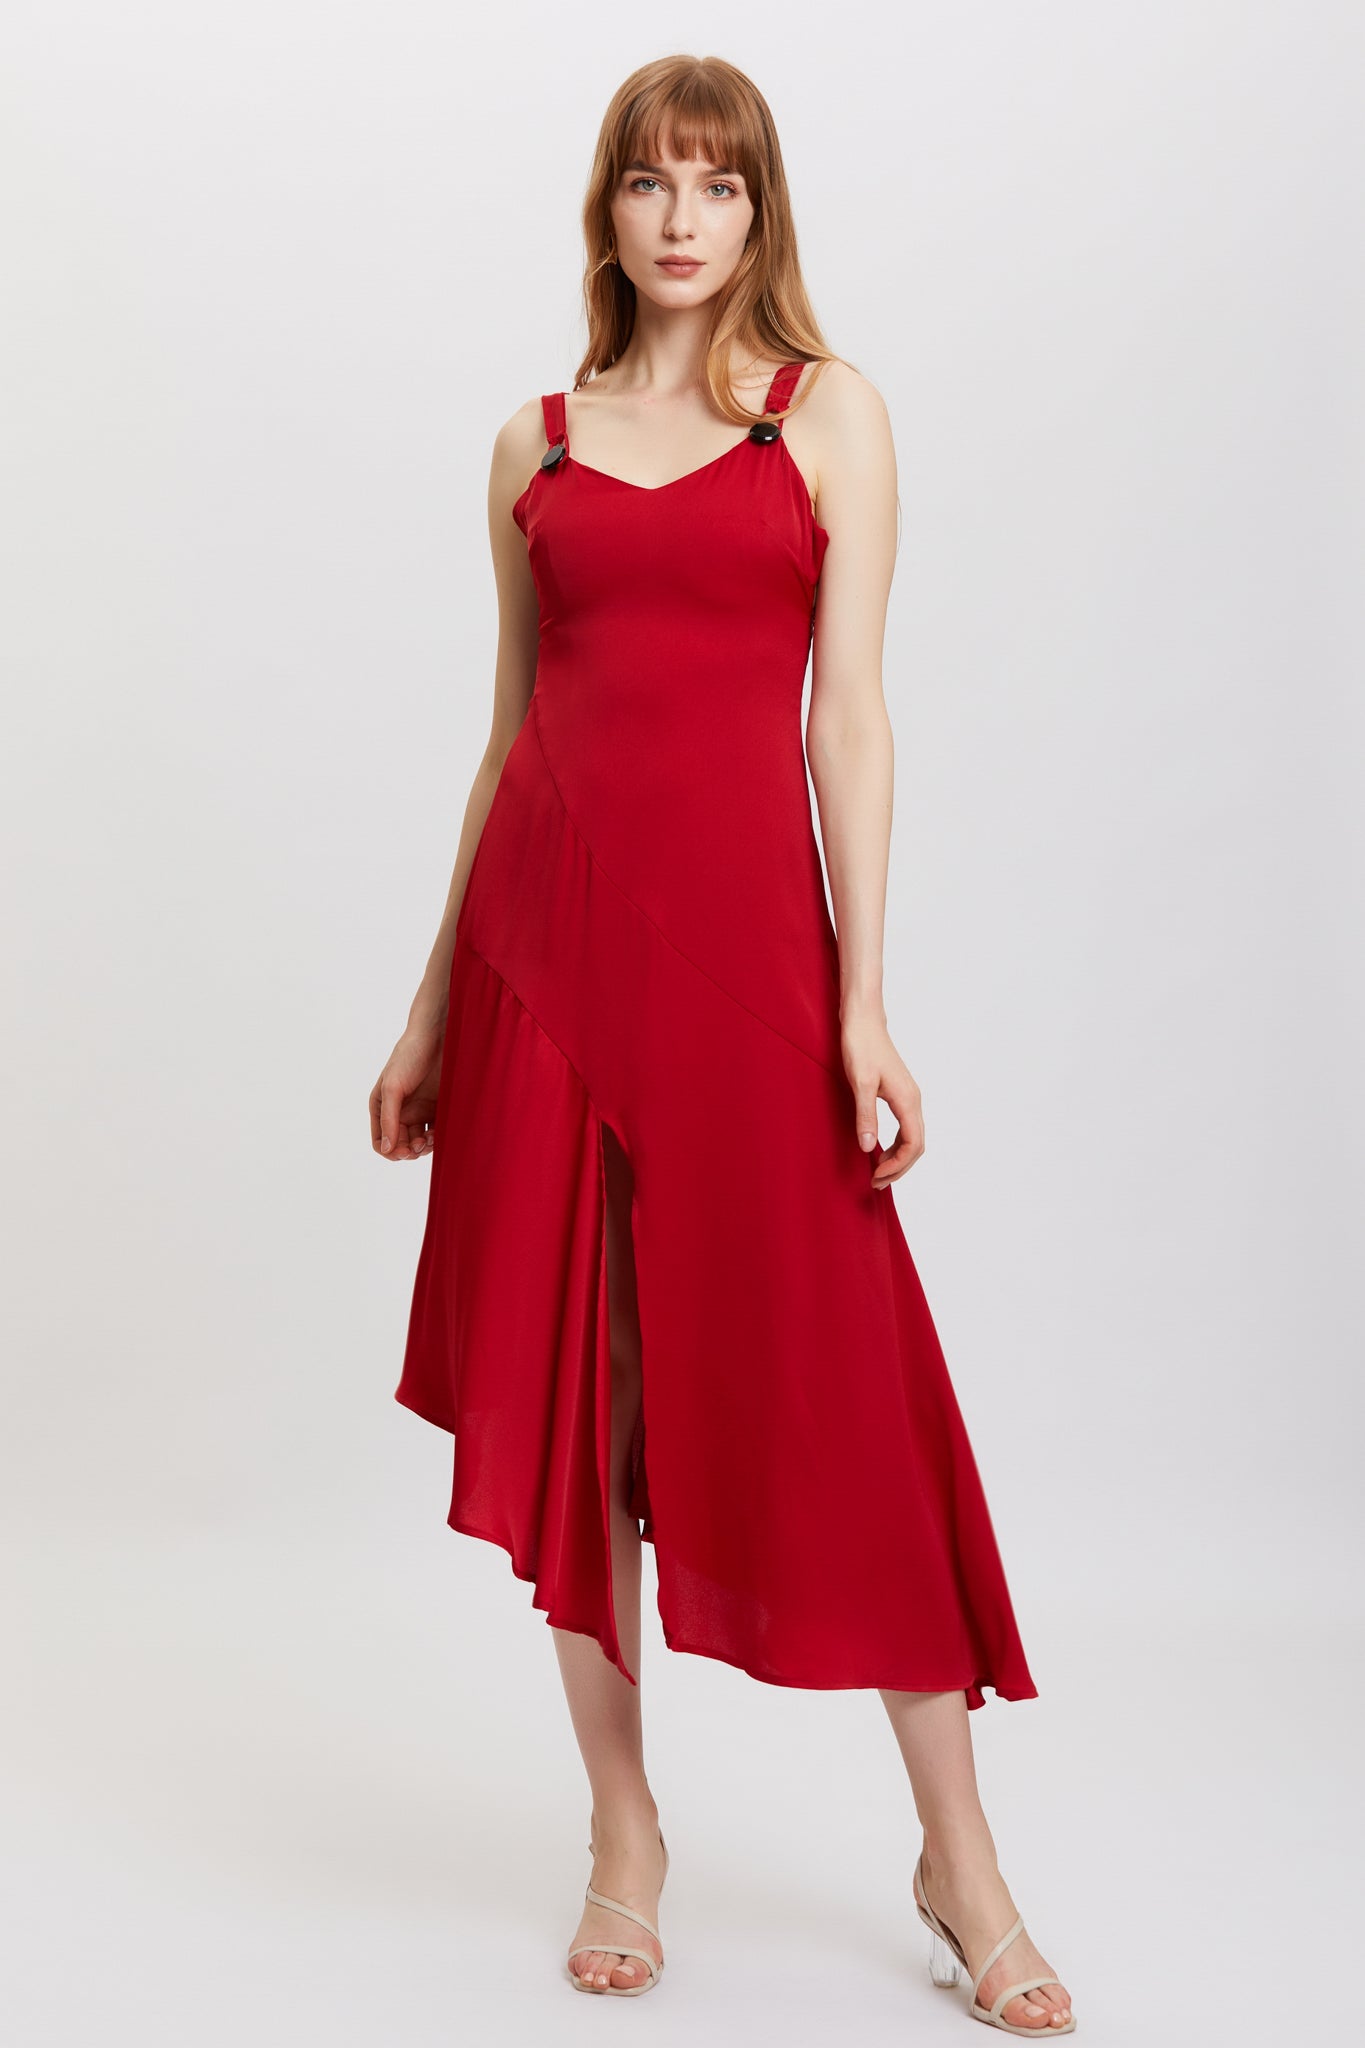 ST | Weigela Red Slip Dress